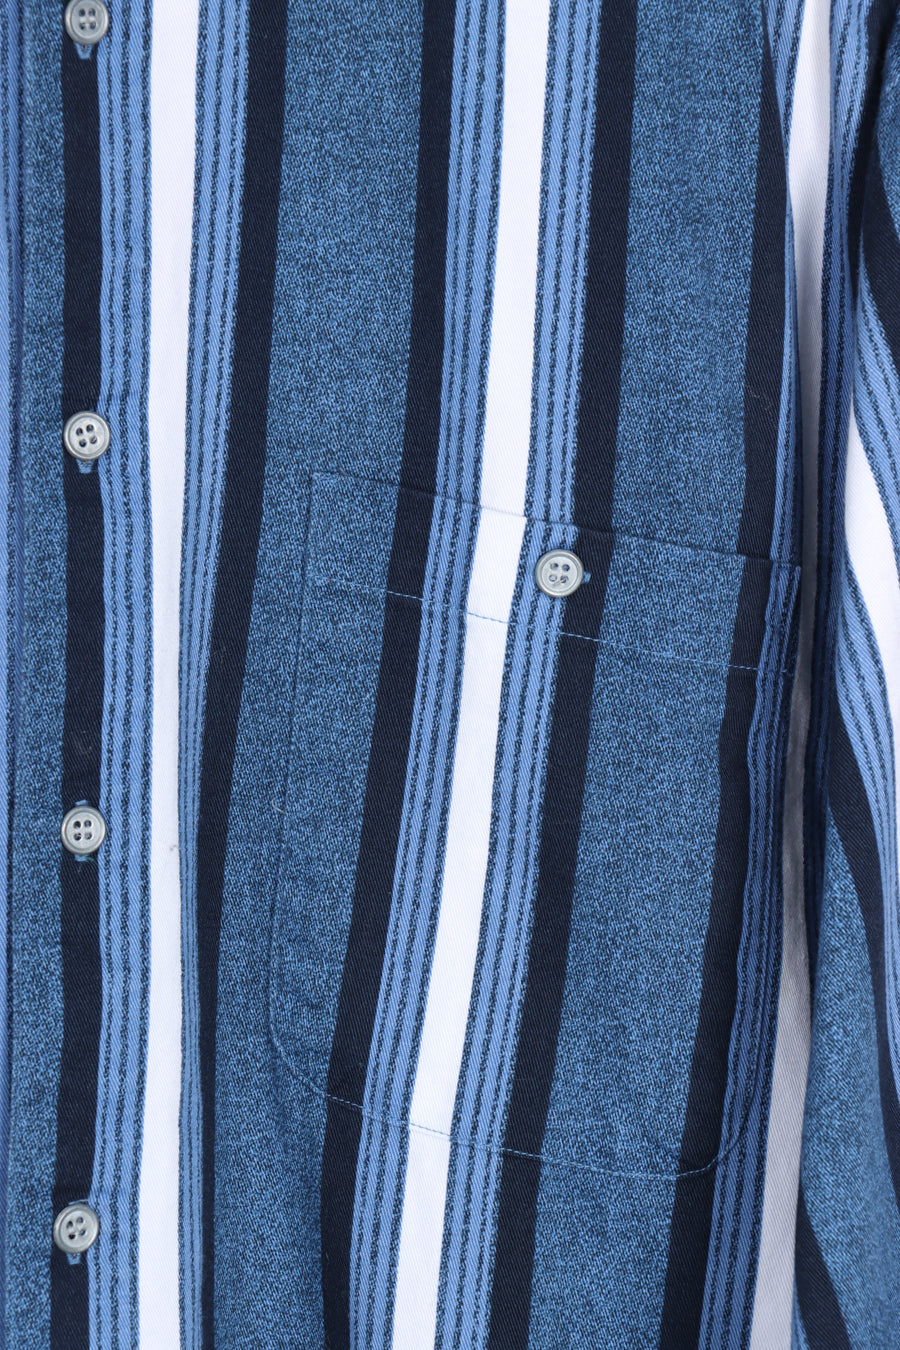 Blue Black & White Stripe Pattern Long Sleeve Button Up Shirt (XL)